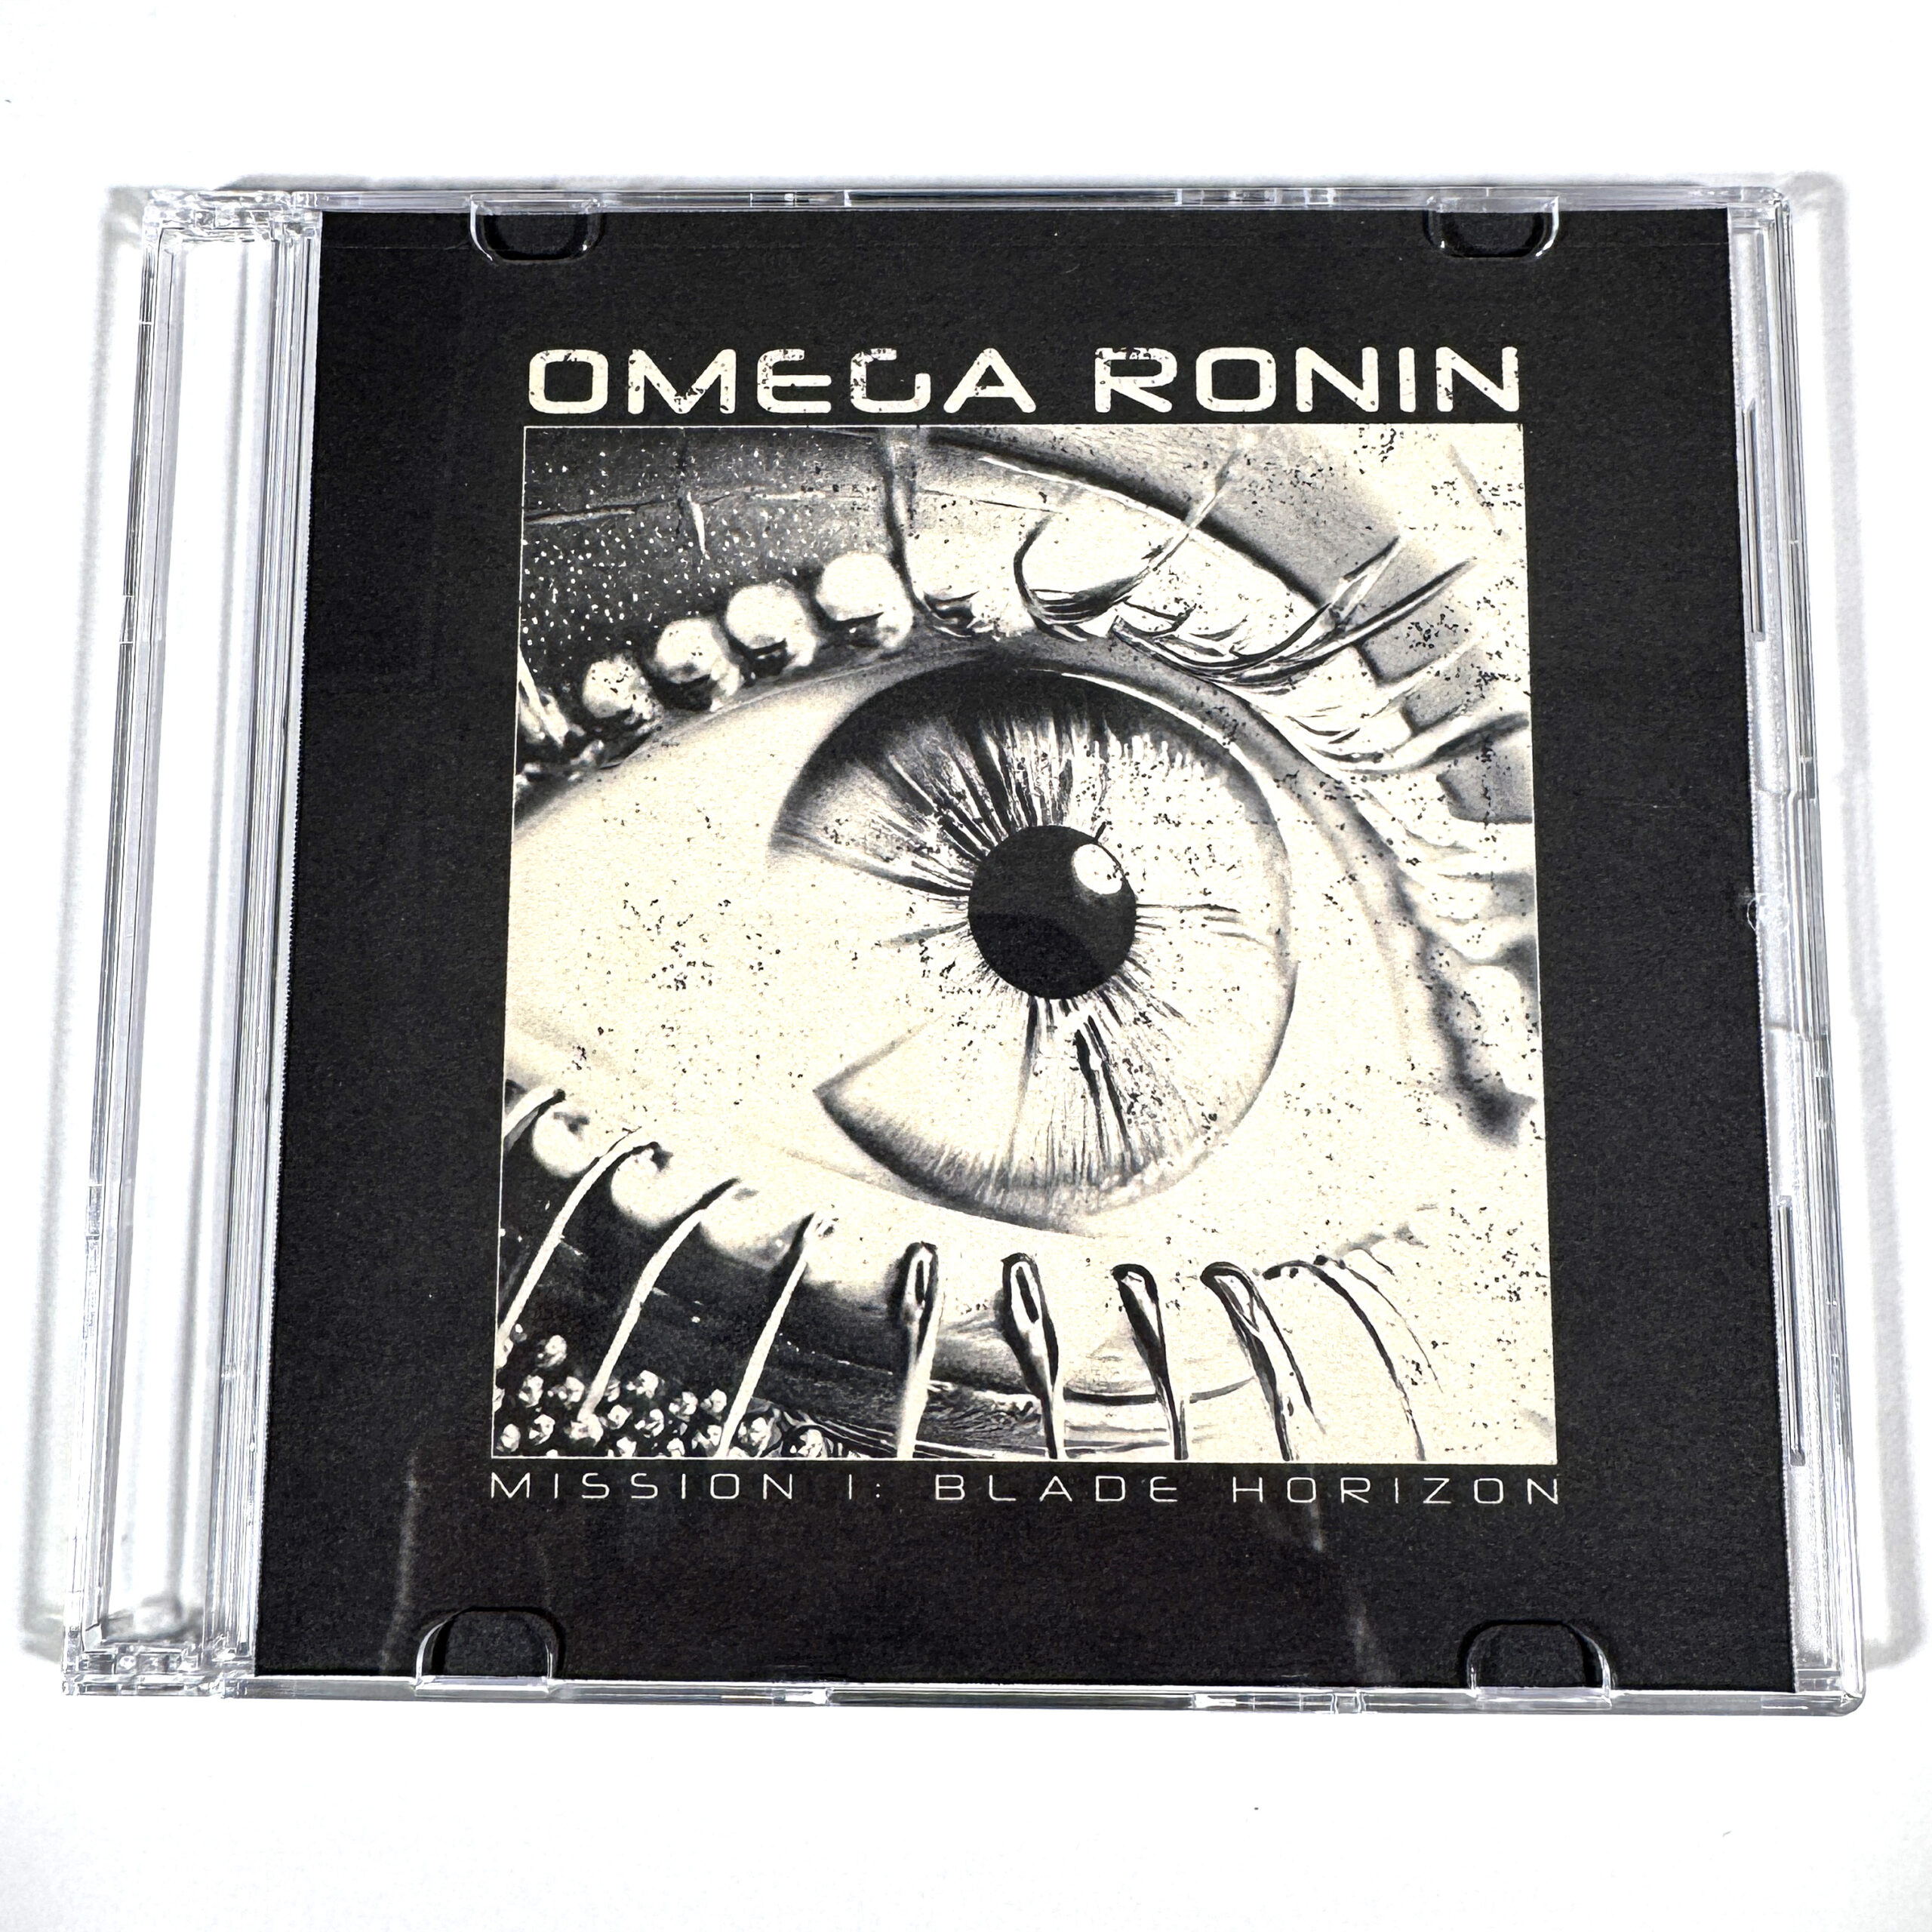 Omega Ronin: Mission 1 Blade Horizon CD